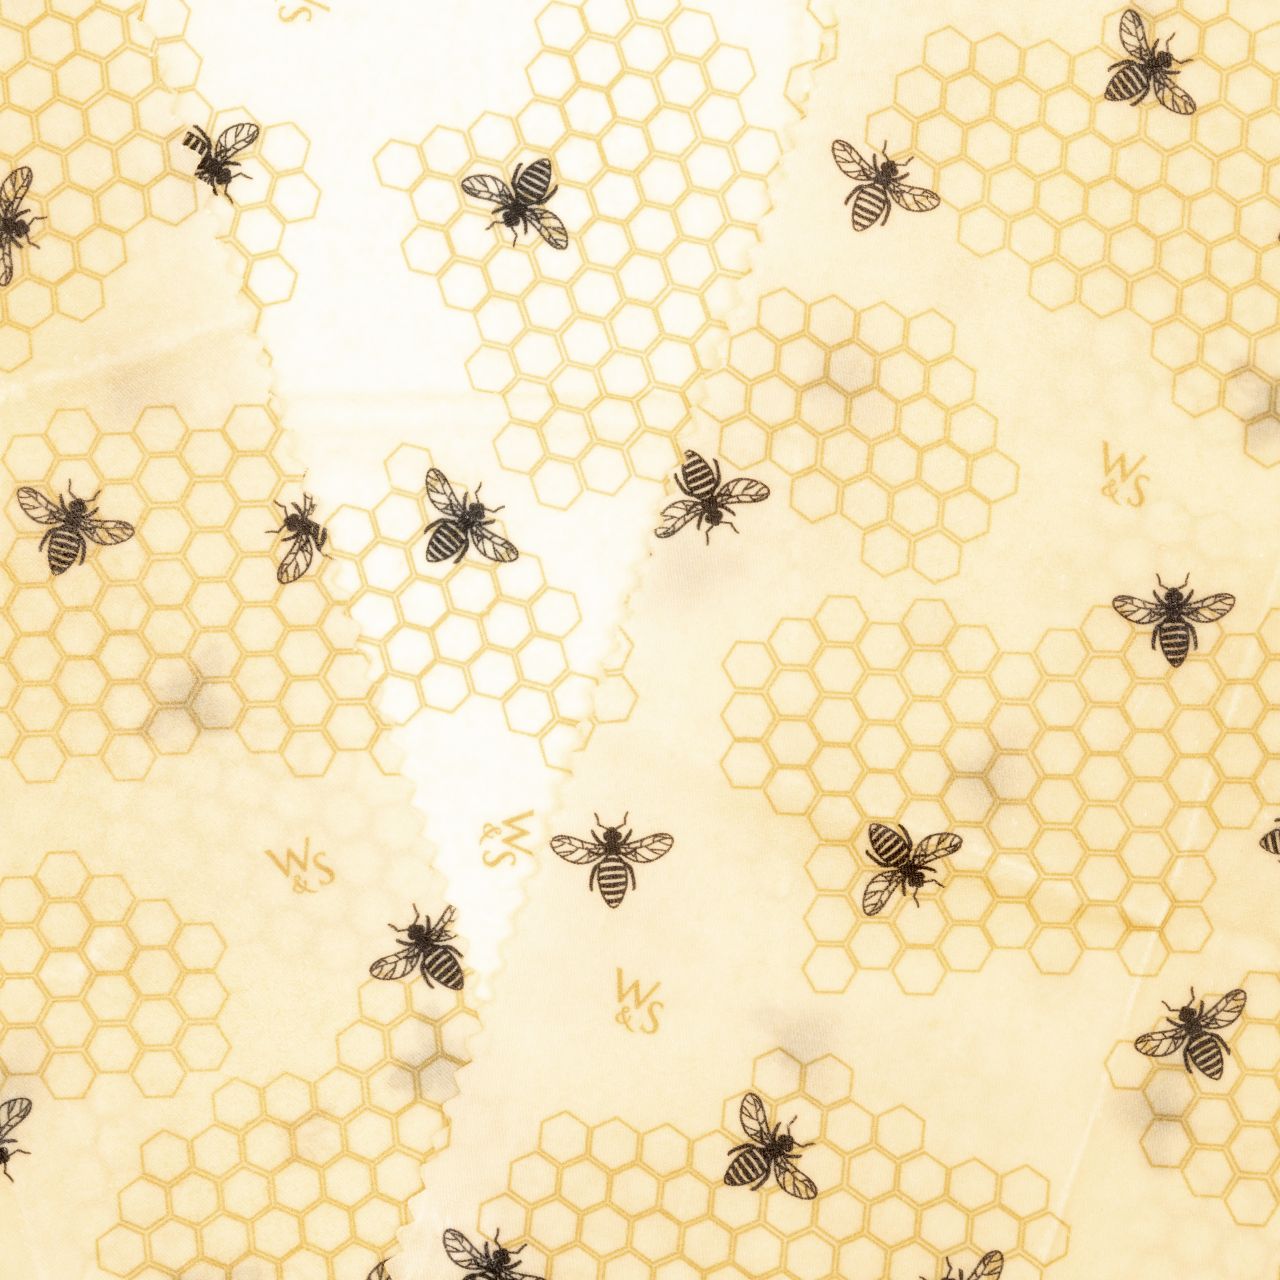 Beeswax Food Wraps - Honeycomb Pattern - 3 Pack (2x Medium, 1x Large)